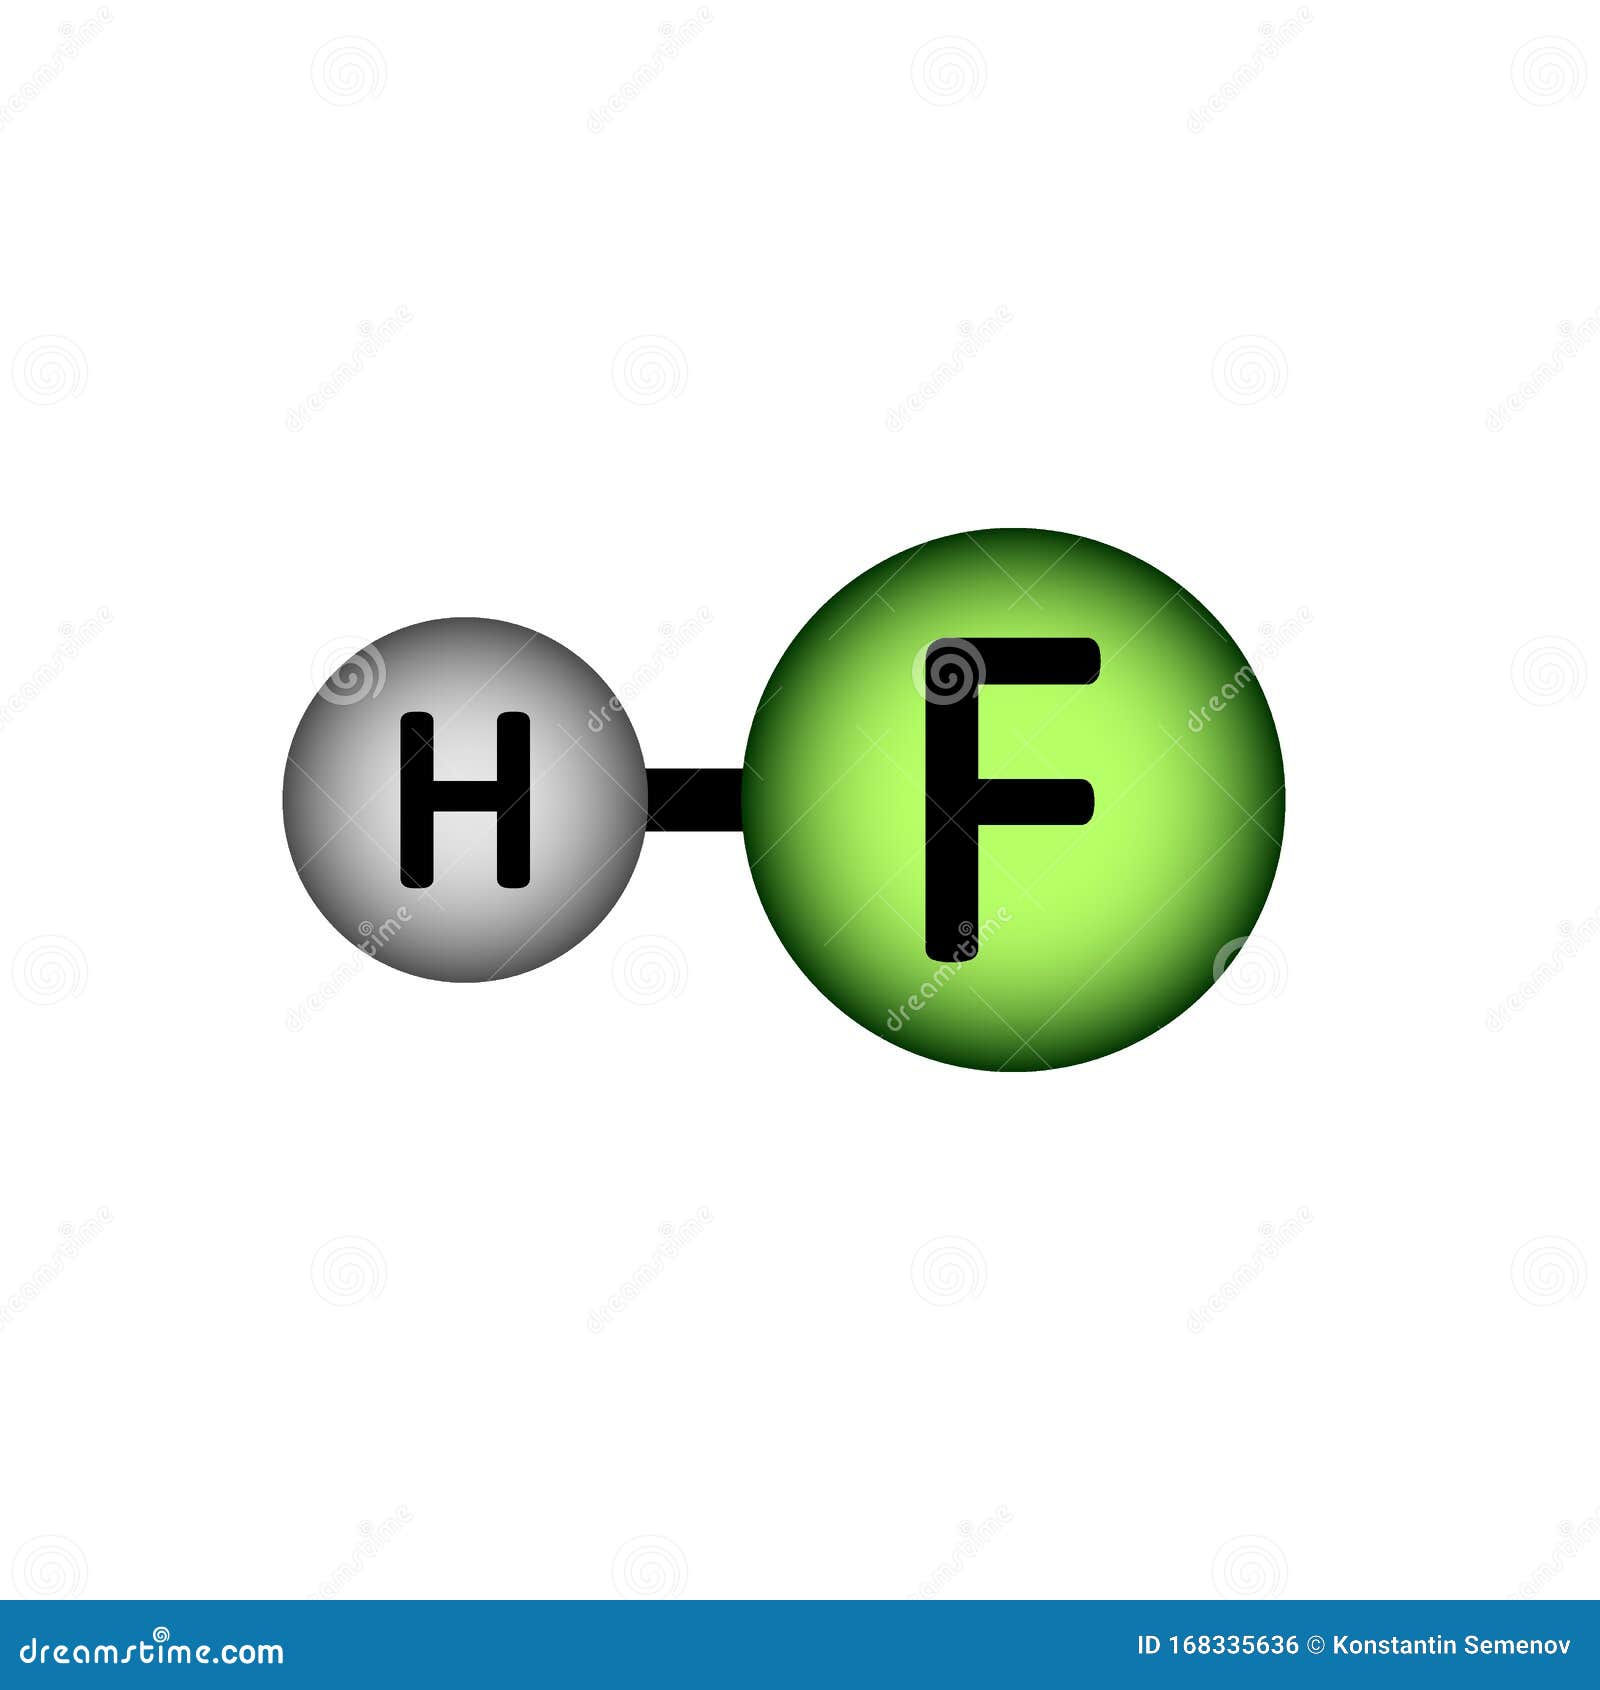 Формула фтора водорода. Молекула фтора формула. Модель молекулы фтора. Фтористый водород. Структура молекулы фтора.